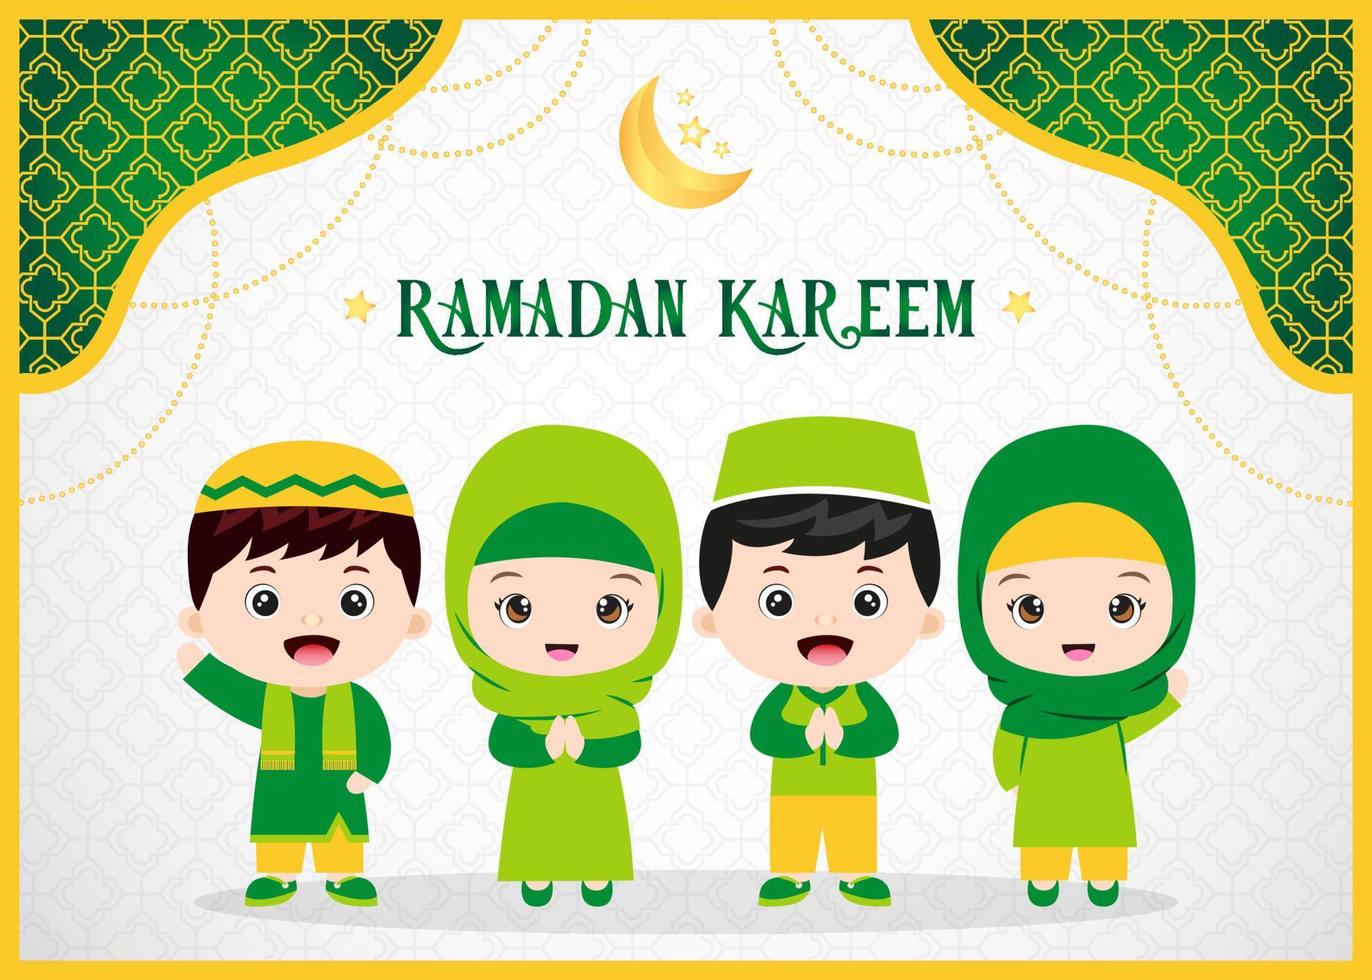 Ramadan Kareem greeting card with muslim kids vector